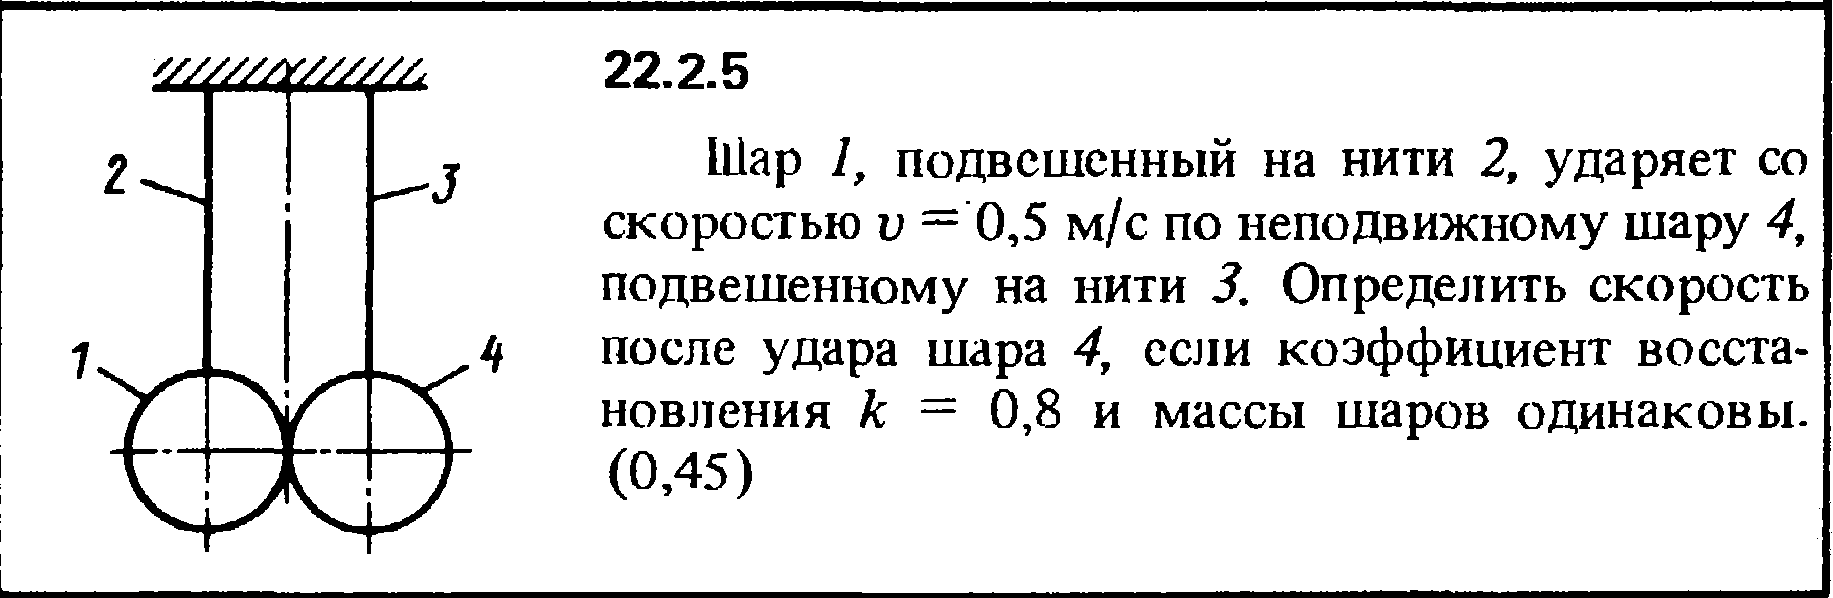 Решение 22.2.5 из сборника (решебника) Кепе О.Е. 1989